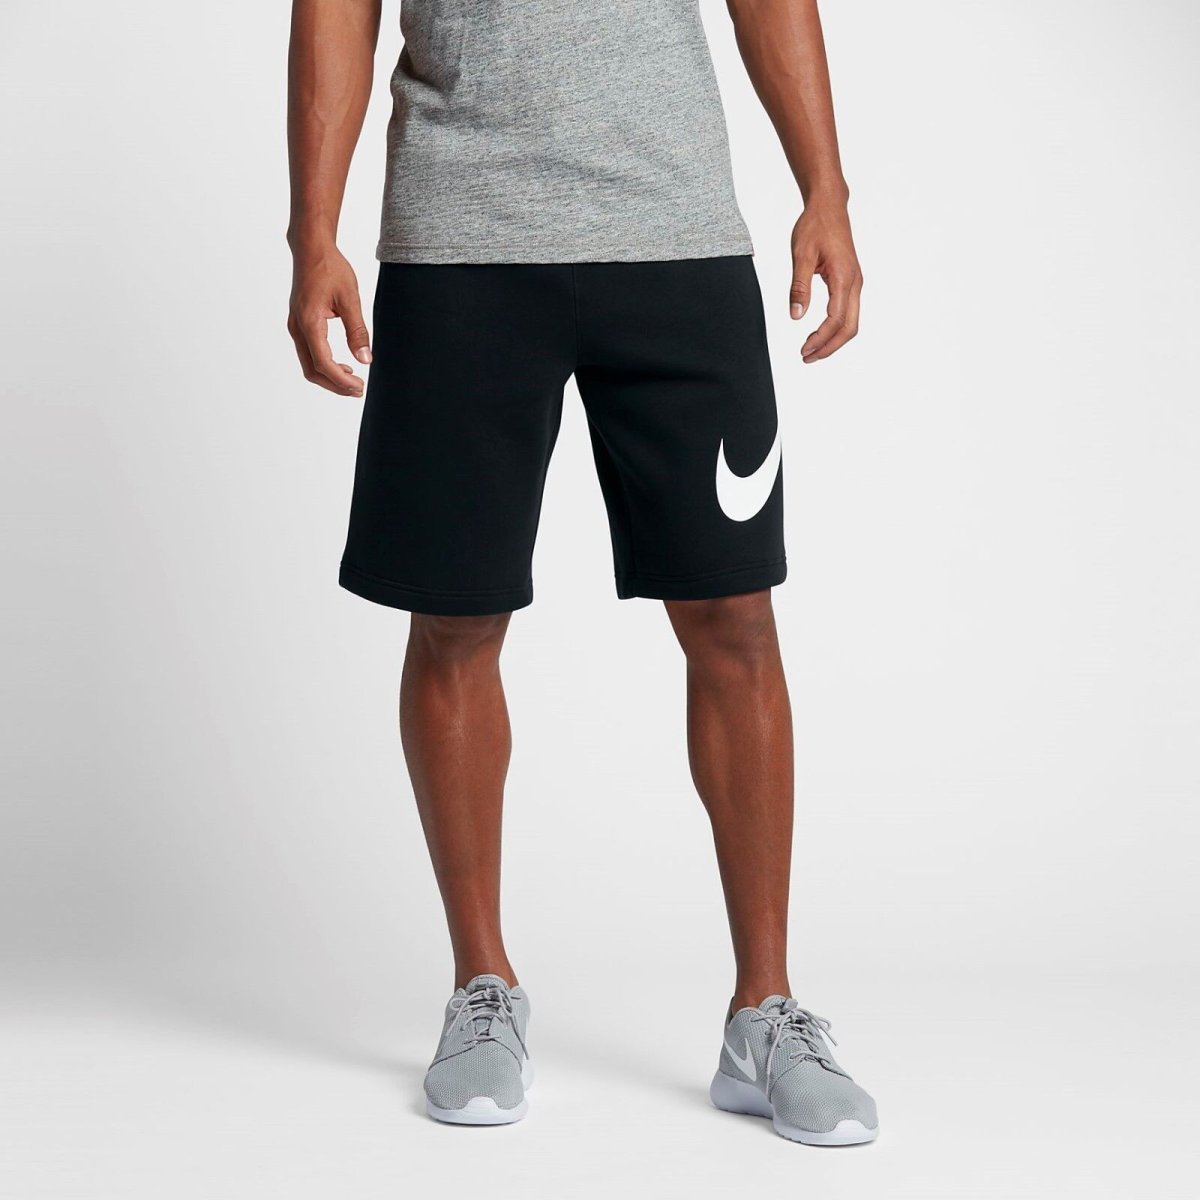 At5267-100 шорты Nike мужские